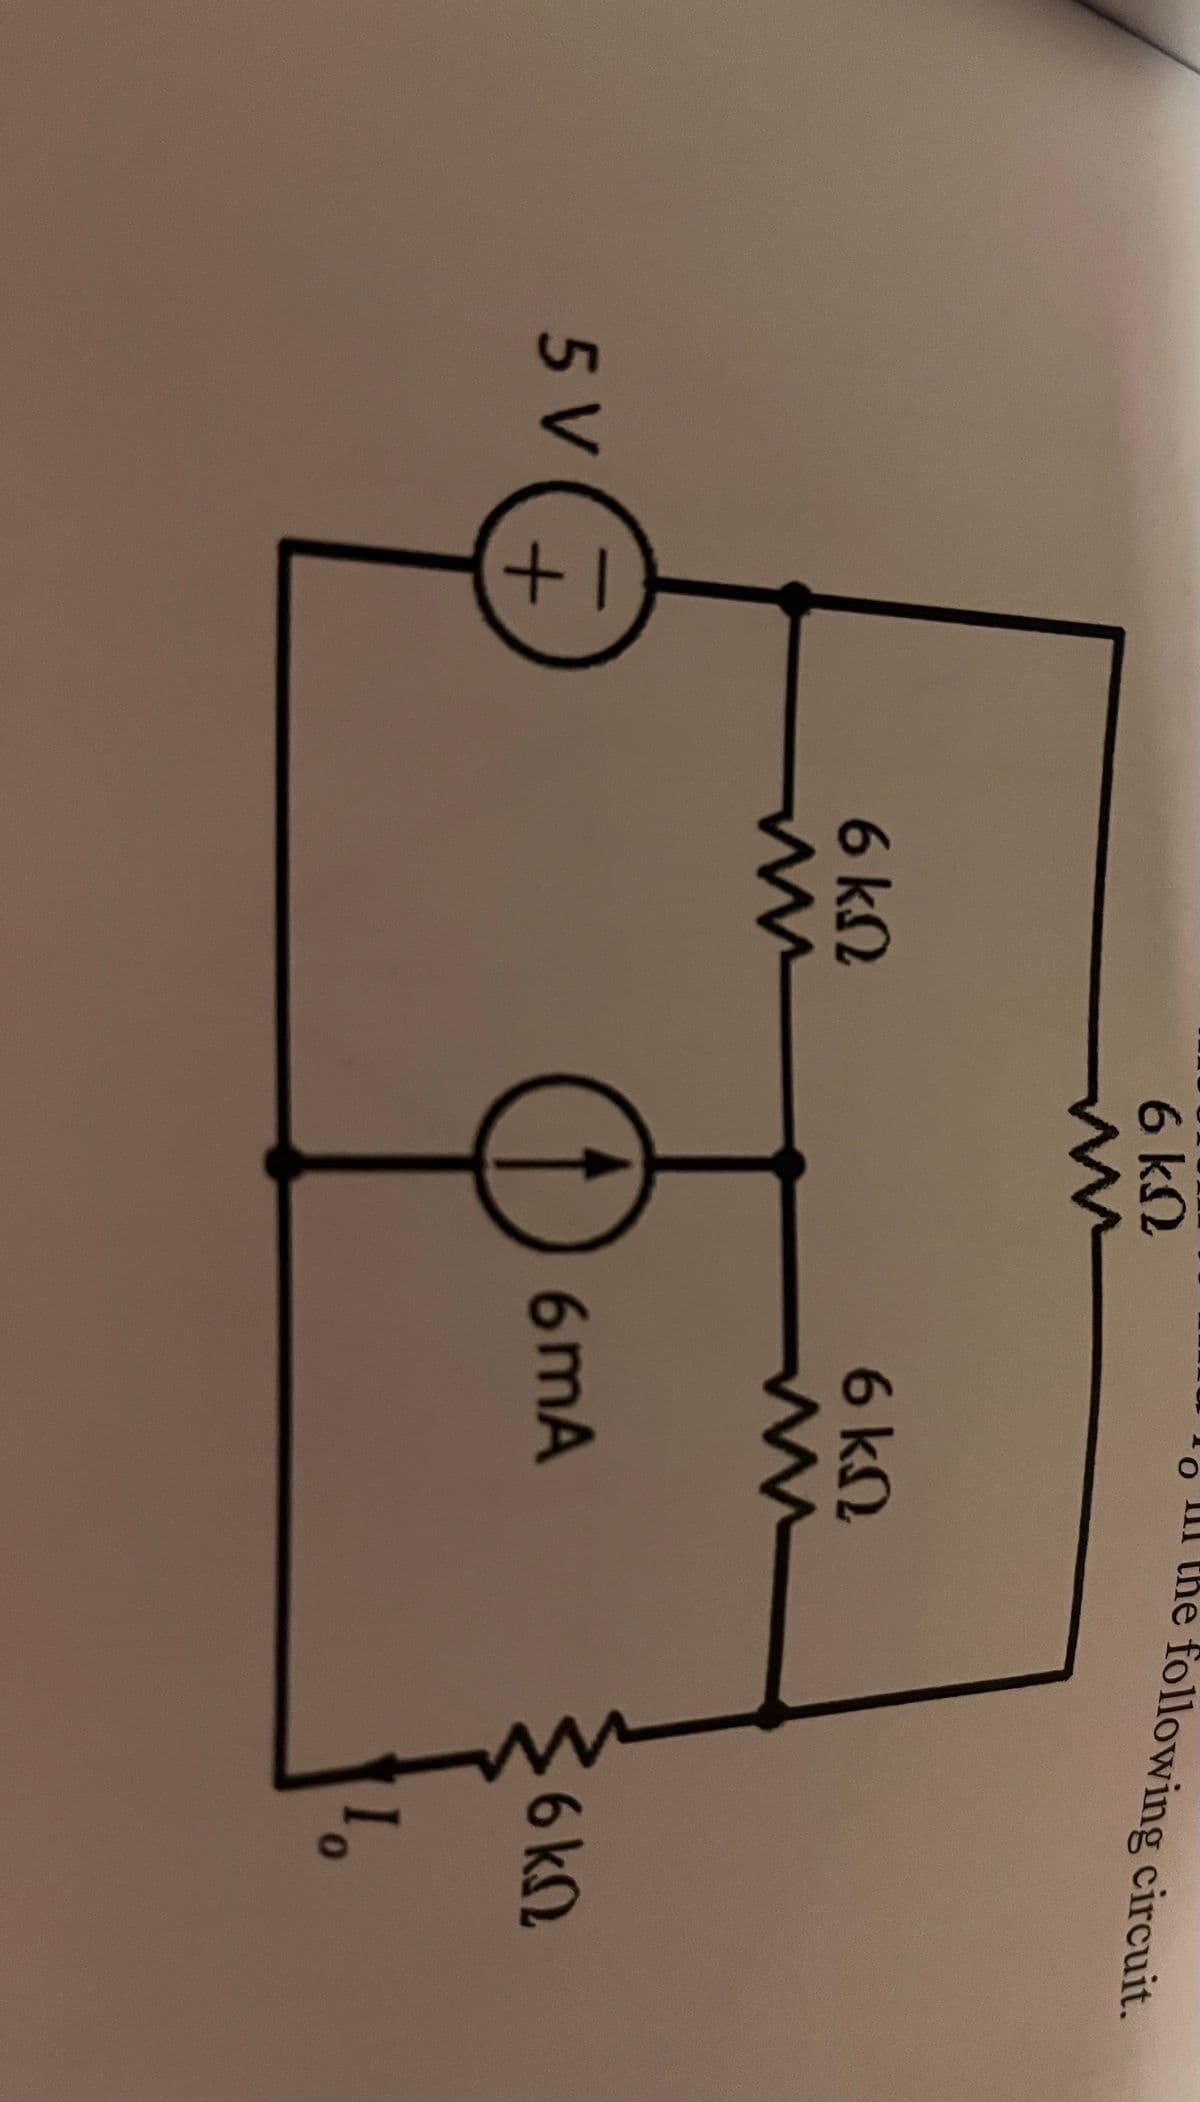 5V
+1
6 ΚΩ
Μ www
6 ΚΩ
Μ
Ο
o III the following circuit.
6 ΚΩ
Μ
6mA
6ΚΩ
L
Ο